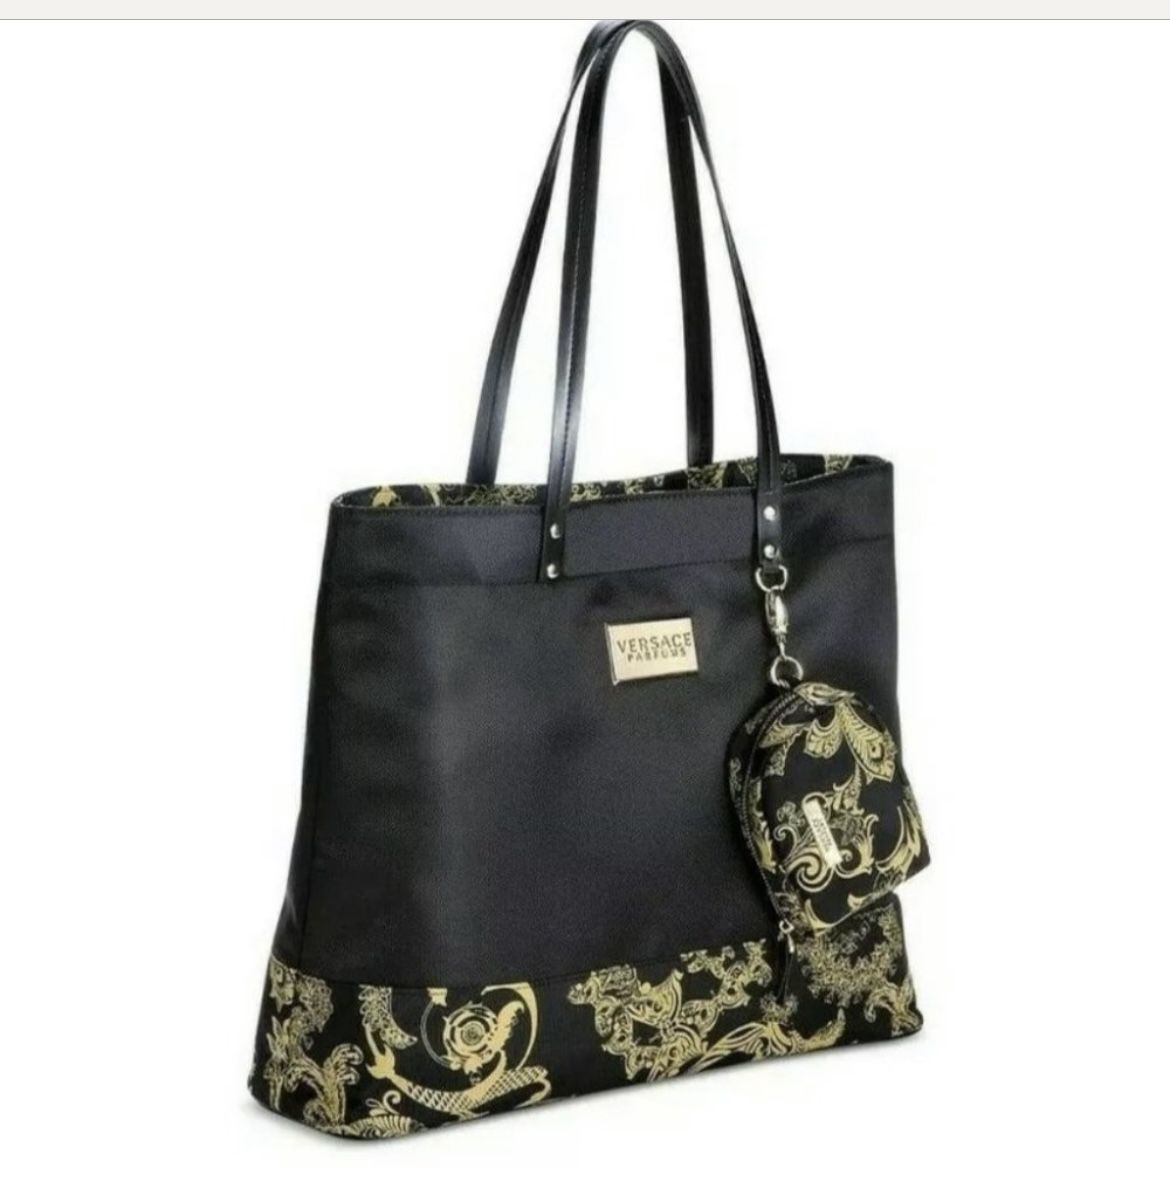 Versace Tote Bag Holdall Weekender Black Metallic Gold Paisley Large Handbag